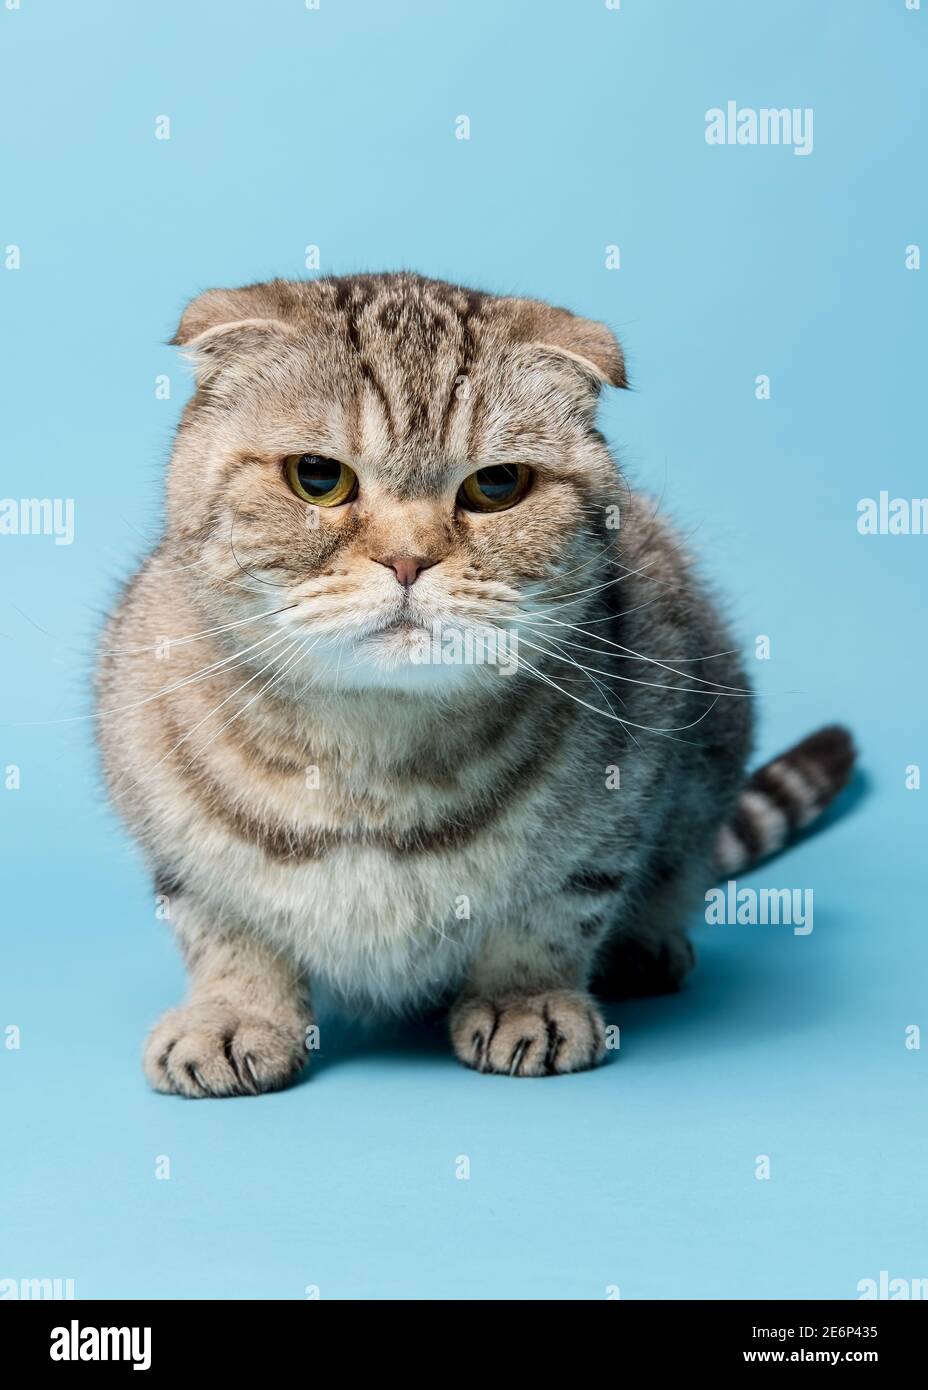 Sad Scottish Fold cat looking thoughtfully into the camera. Studio, blue background. Stock Photo